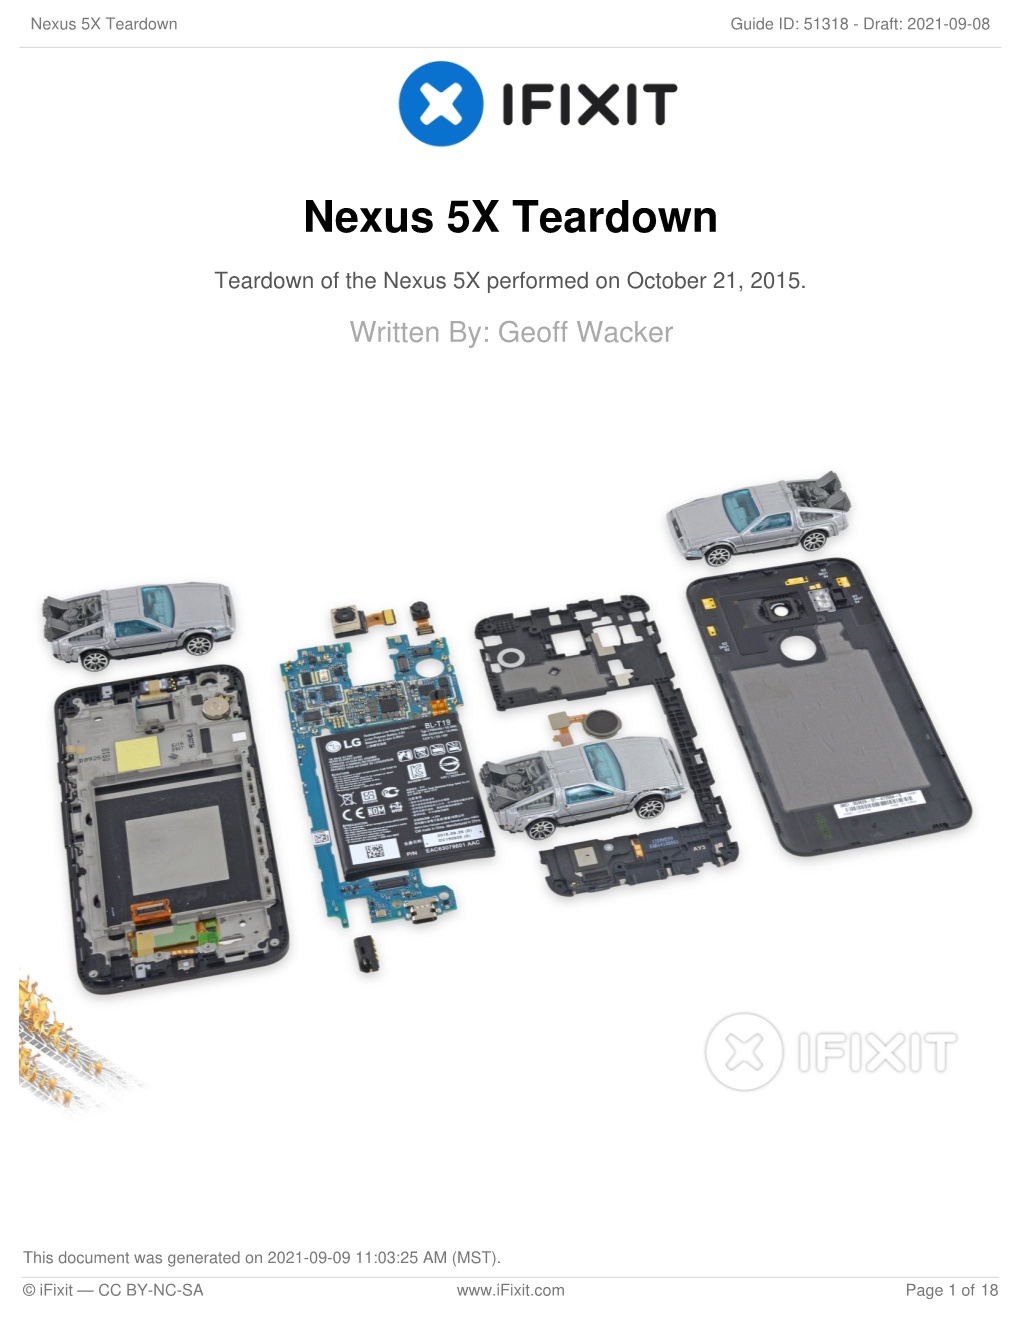 Nexus 5X Teardown Guide ID: 51318 - Draft: 2021-09-08